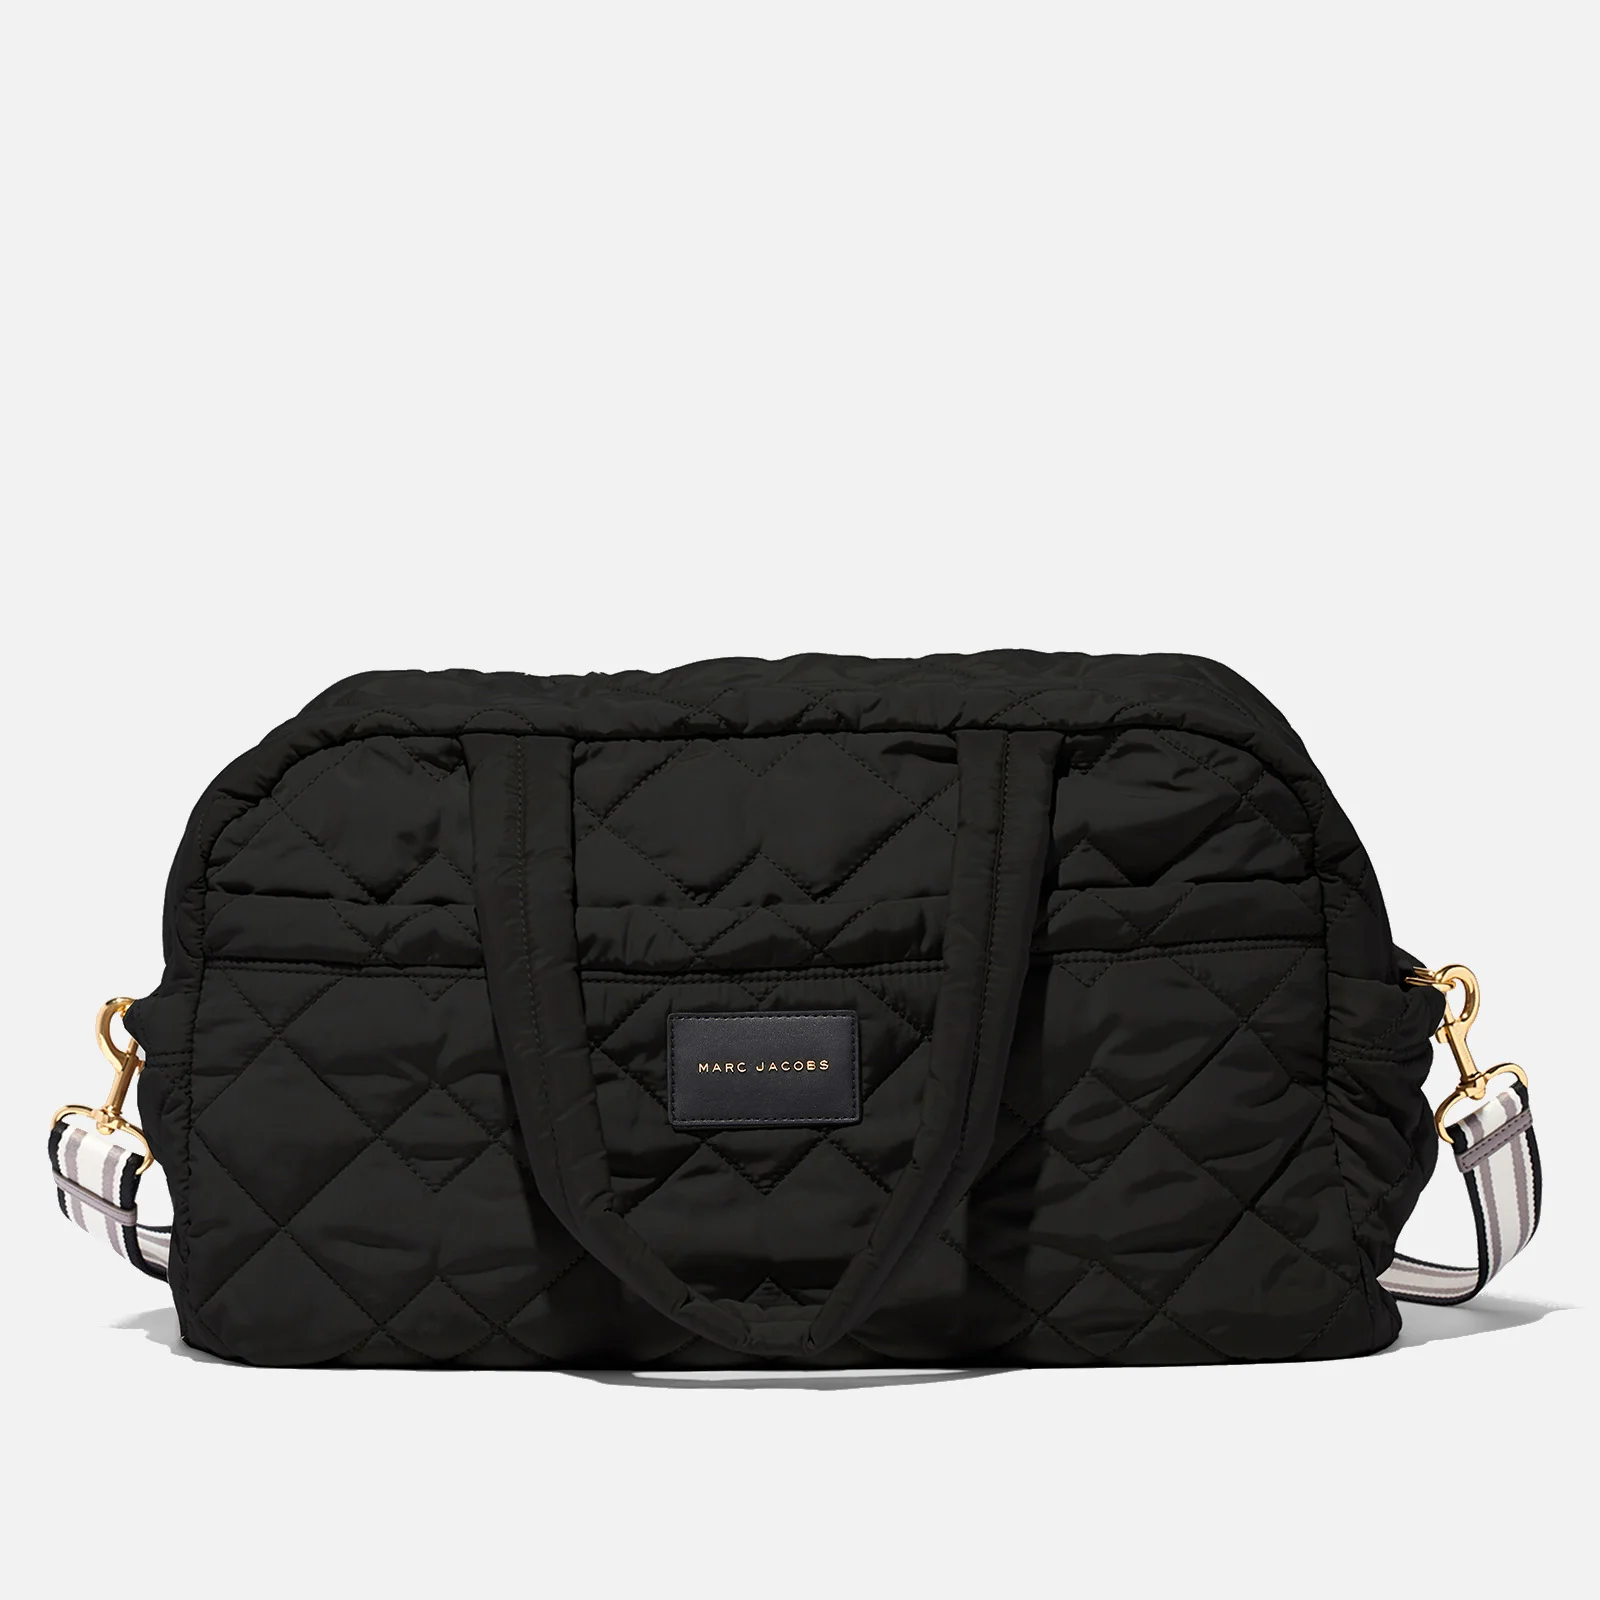 Marc Jacobs Women's Essentials Large Weekender Bag - Black Image 1